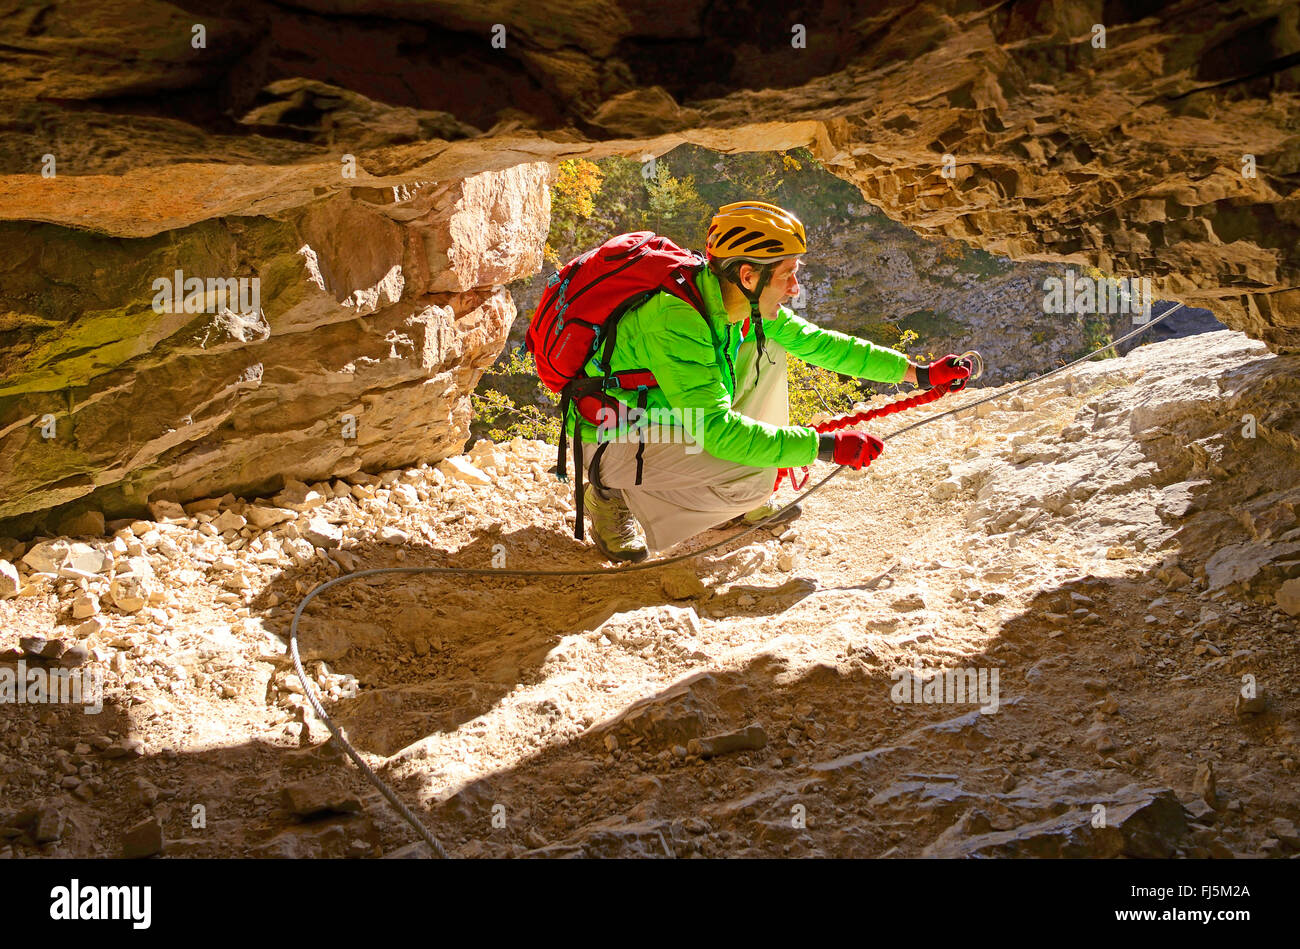 climber in a rock window, via ferrata in the canyon of Etroits, France, Hautes Alpes, Saint Etienne en Devoluy Stock Photo